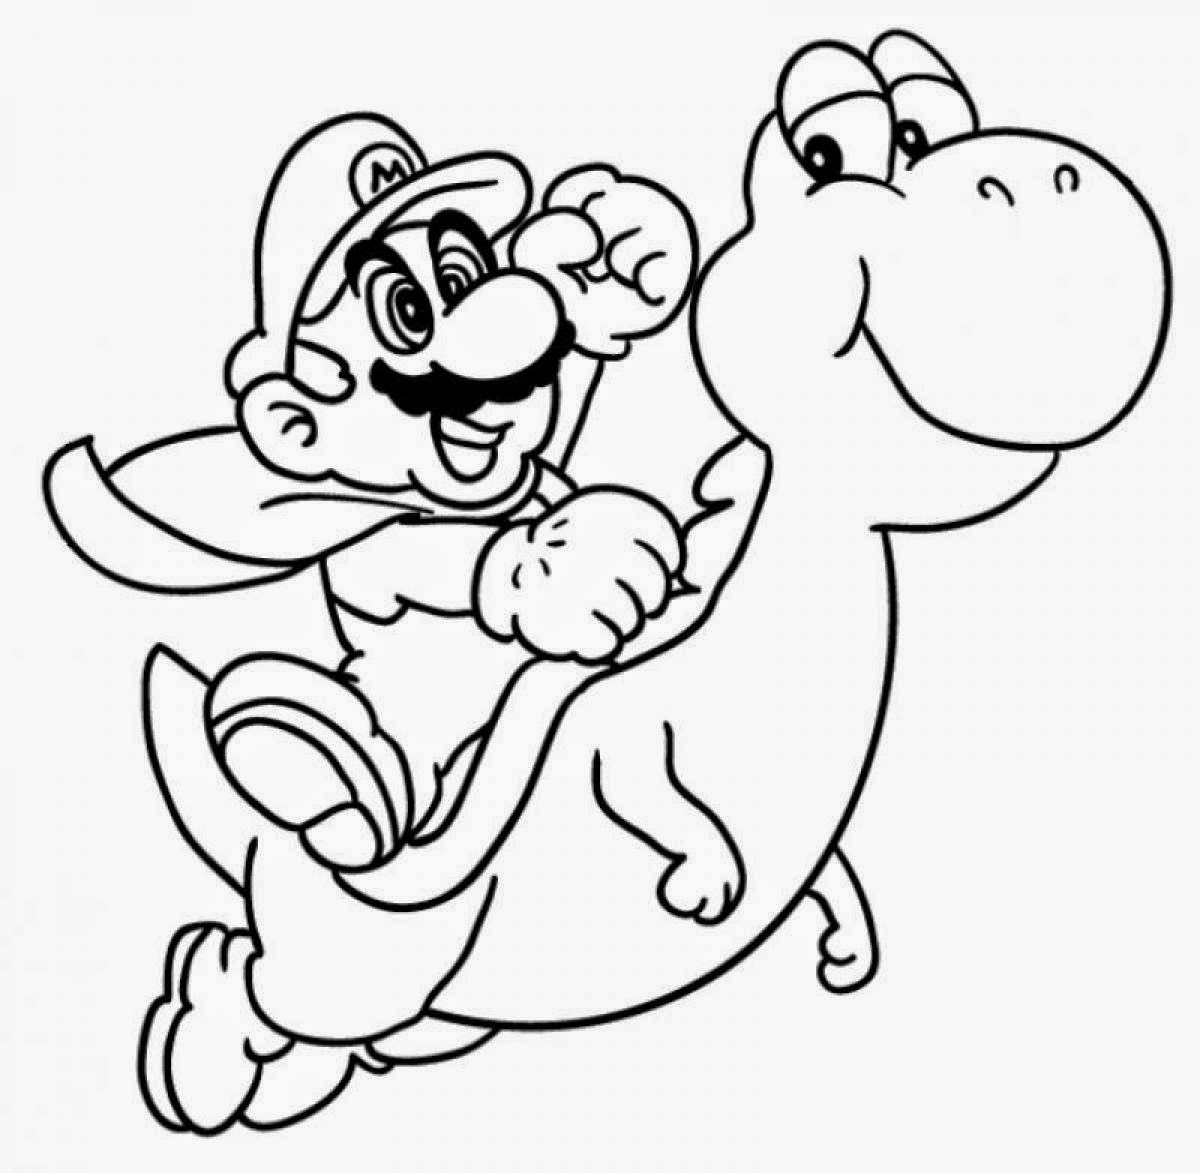 Drawing Super Mario Bros 20 Video Games – Printable ...